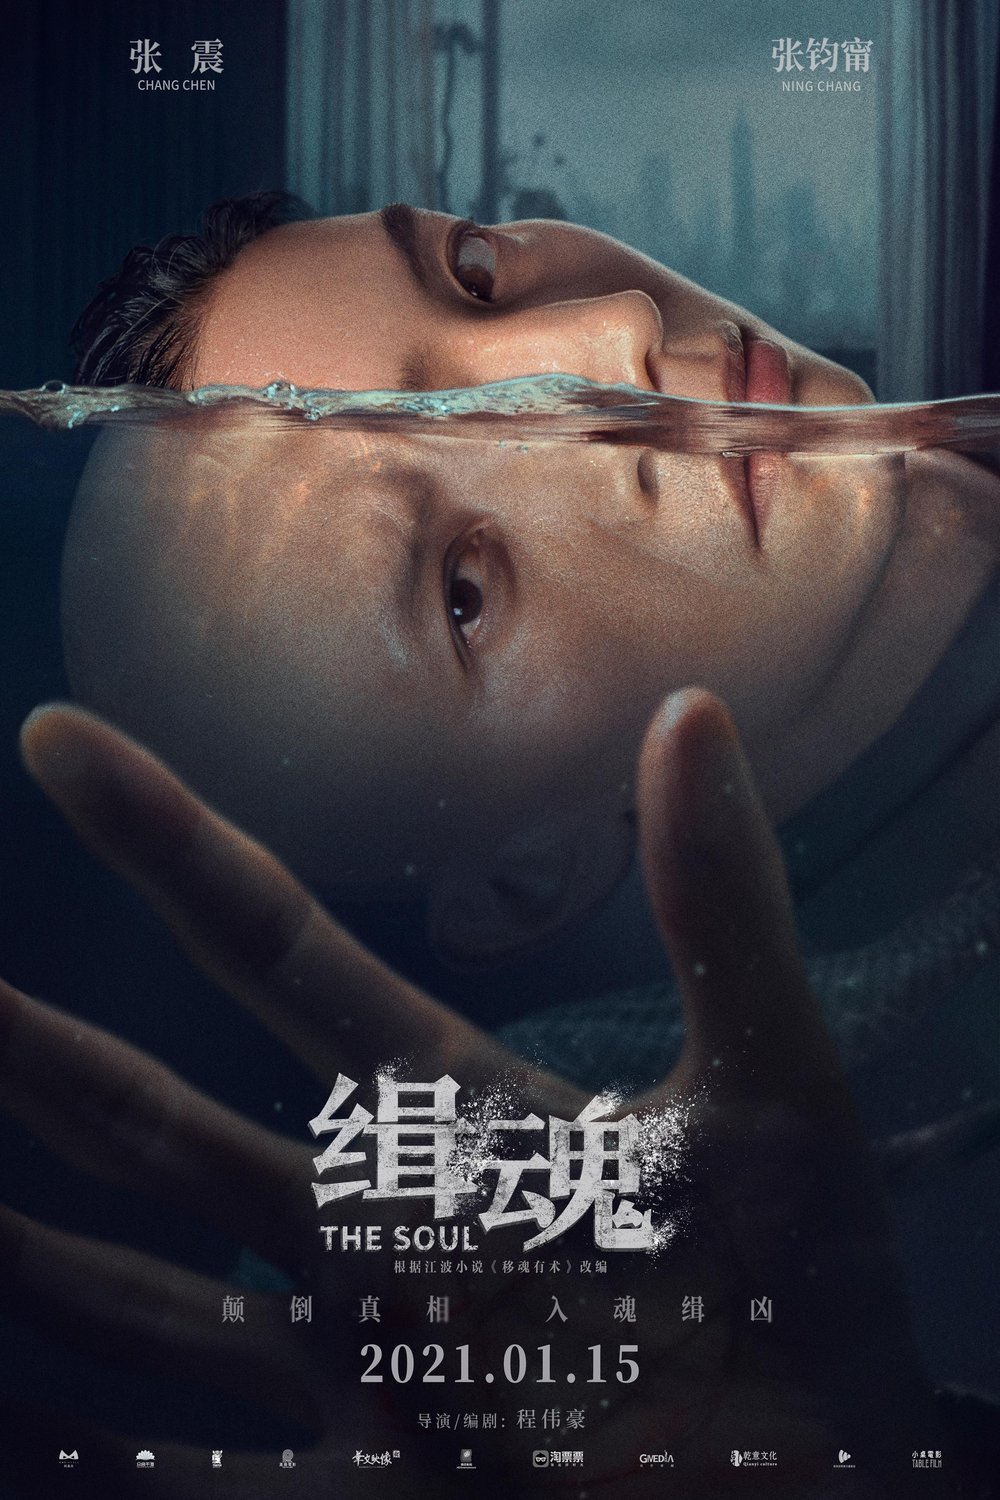 L'affiche originale du film Ji hun en Chinois